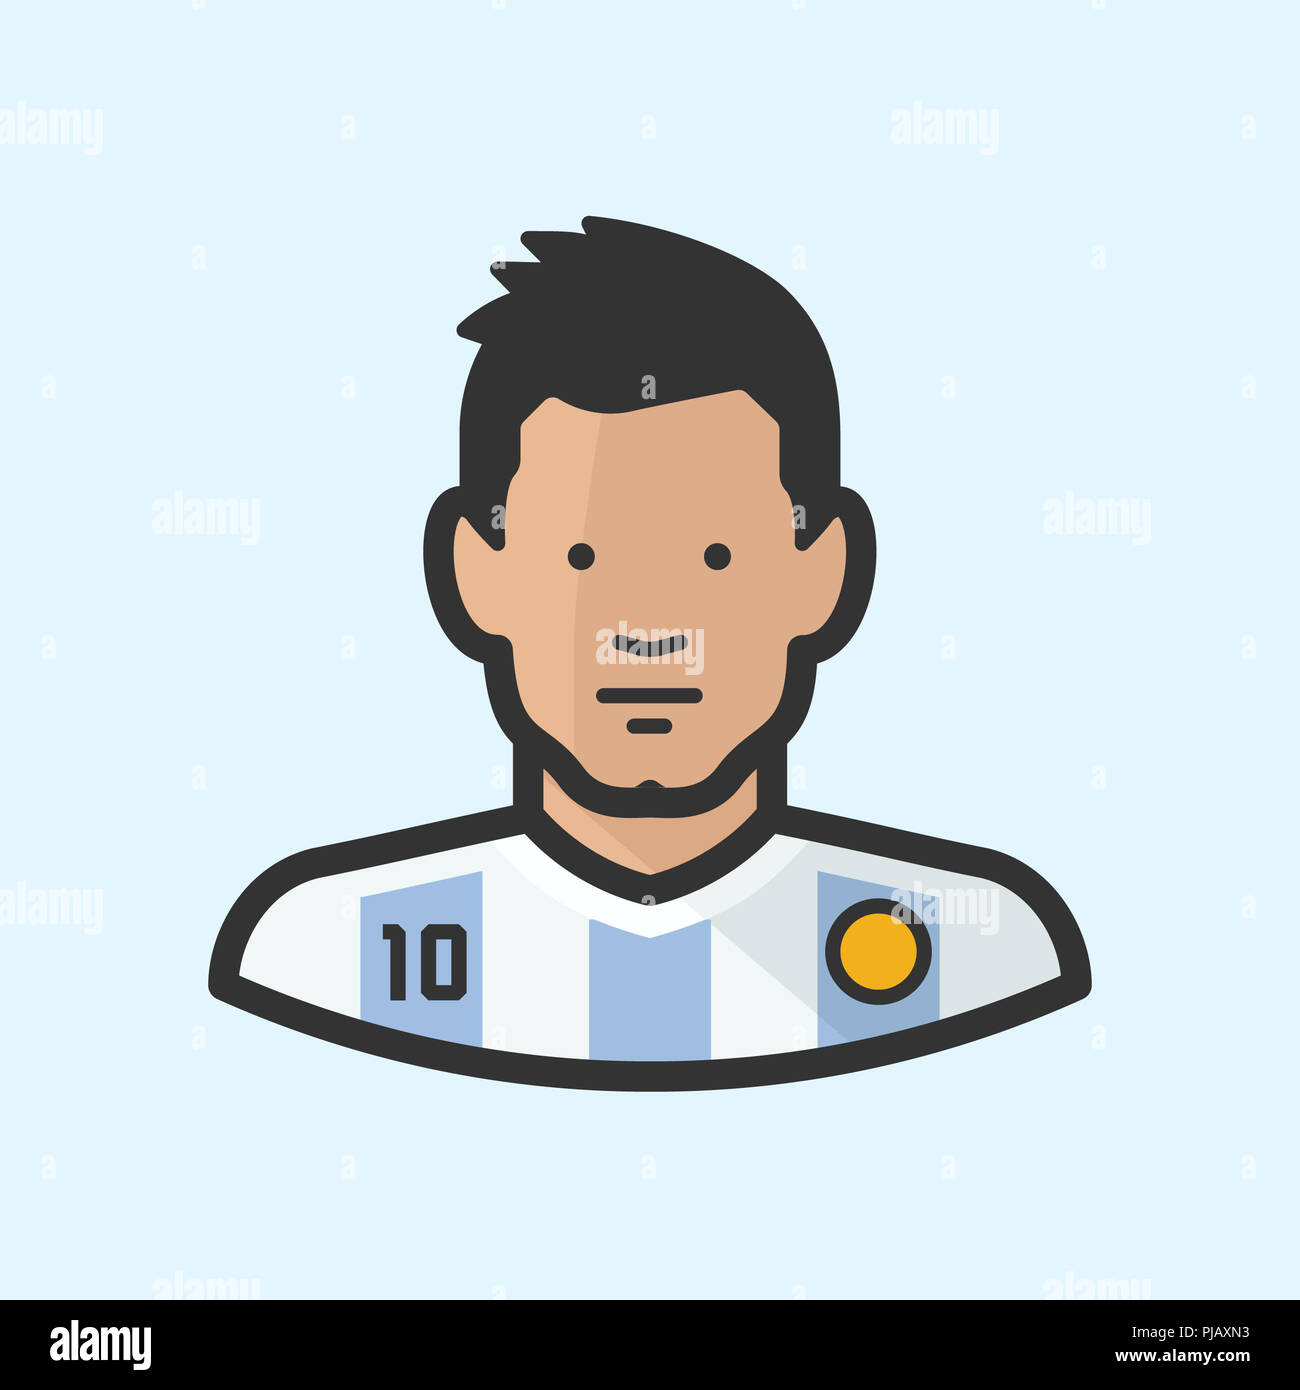 Football player Messi Stock Photo - Alamy